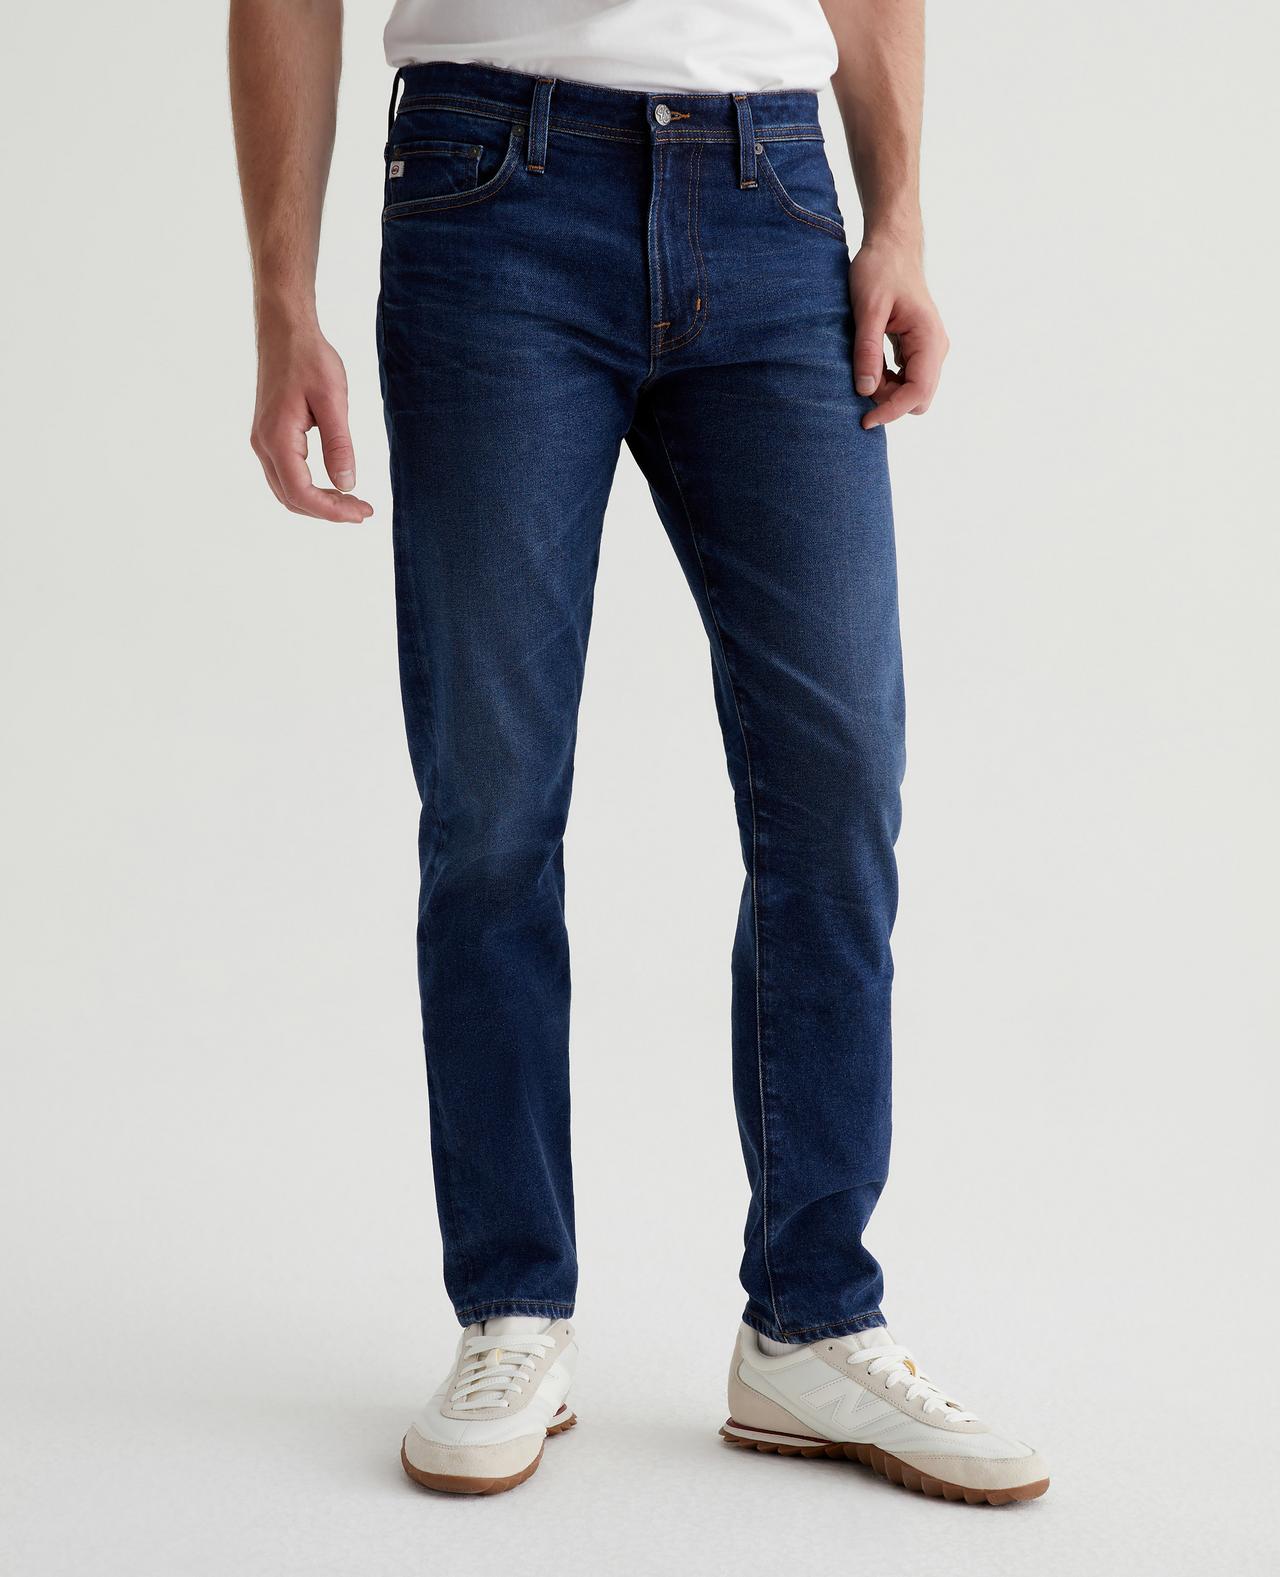 Dylan Slim Skinny Jeans - AG Jeans - Danali - 1139CCS-06YHFF-30